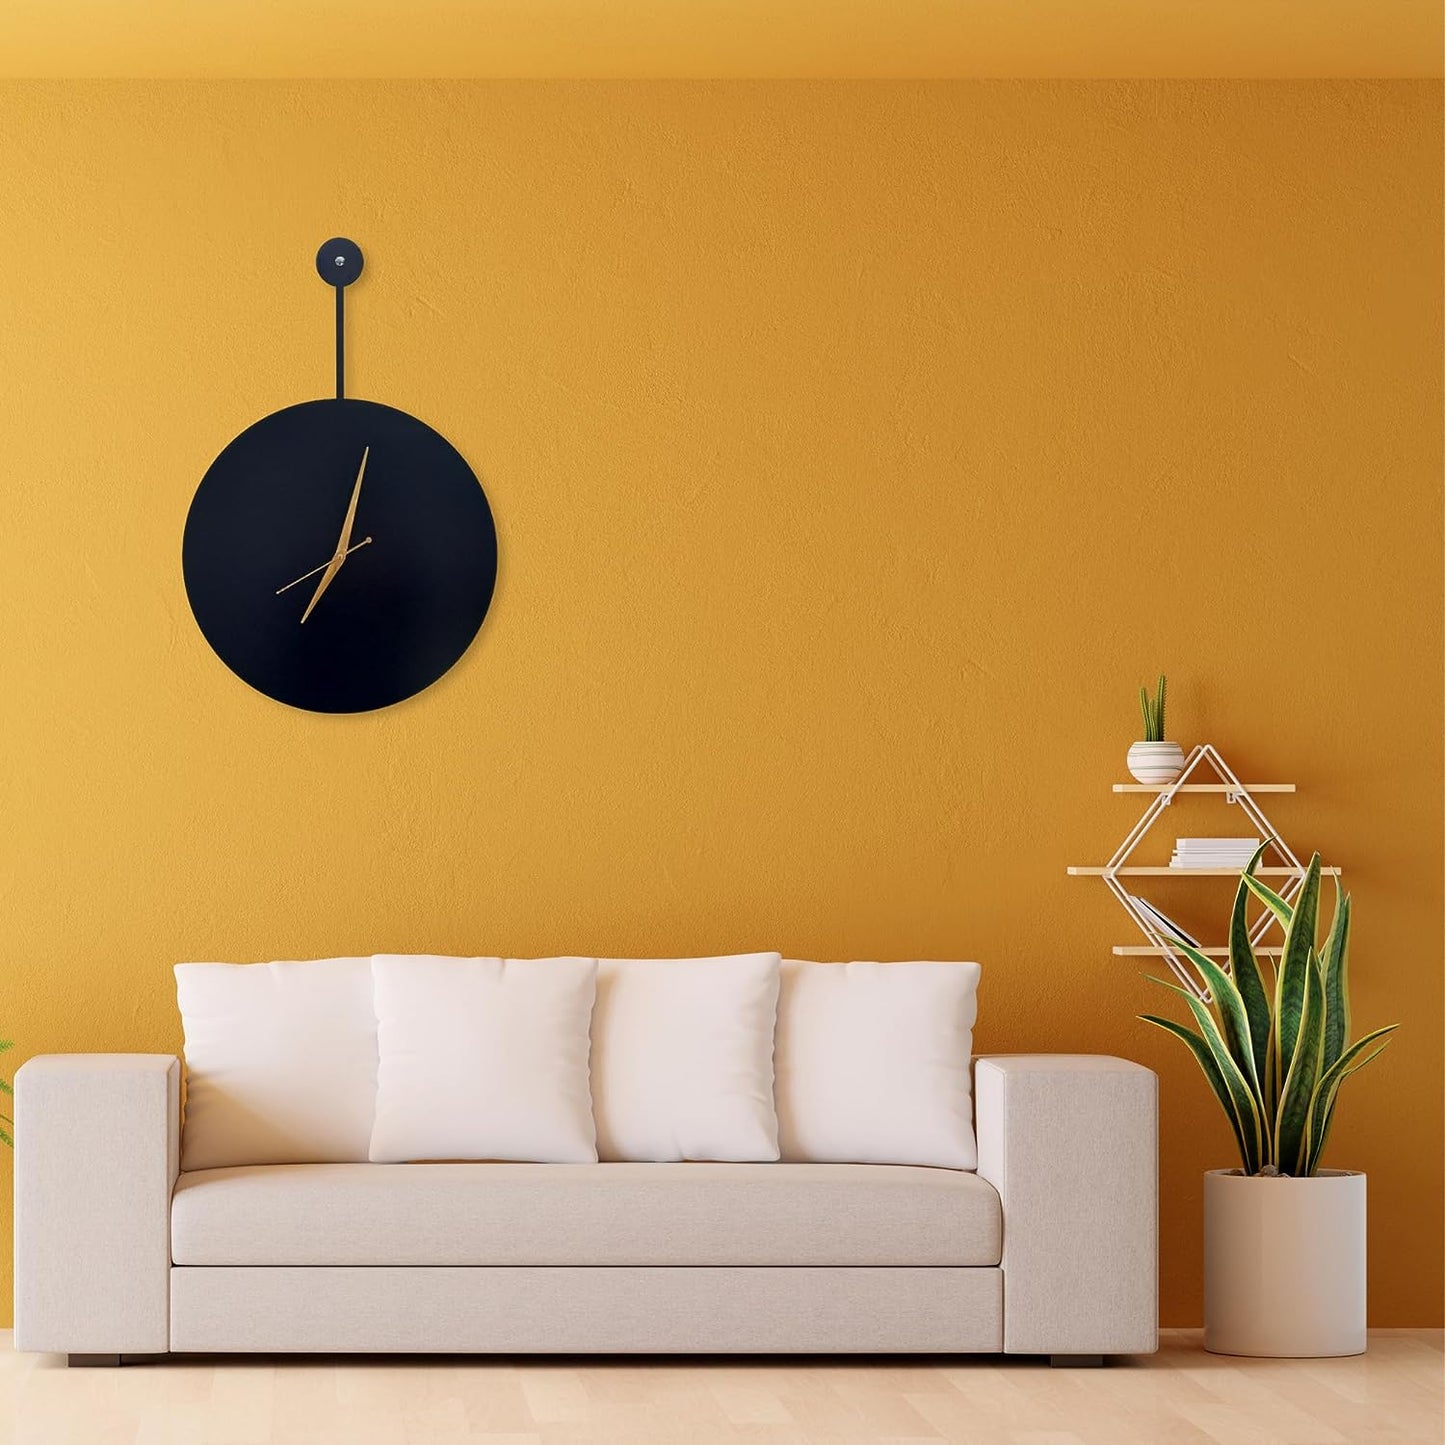 Designer Stylish Wooden Wall Clock